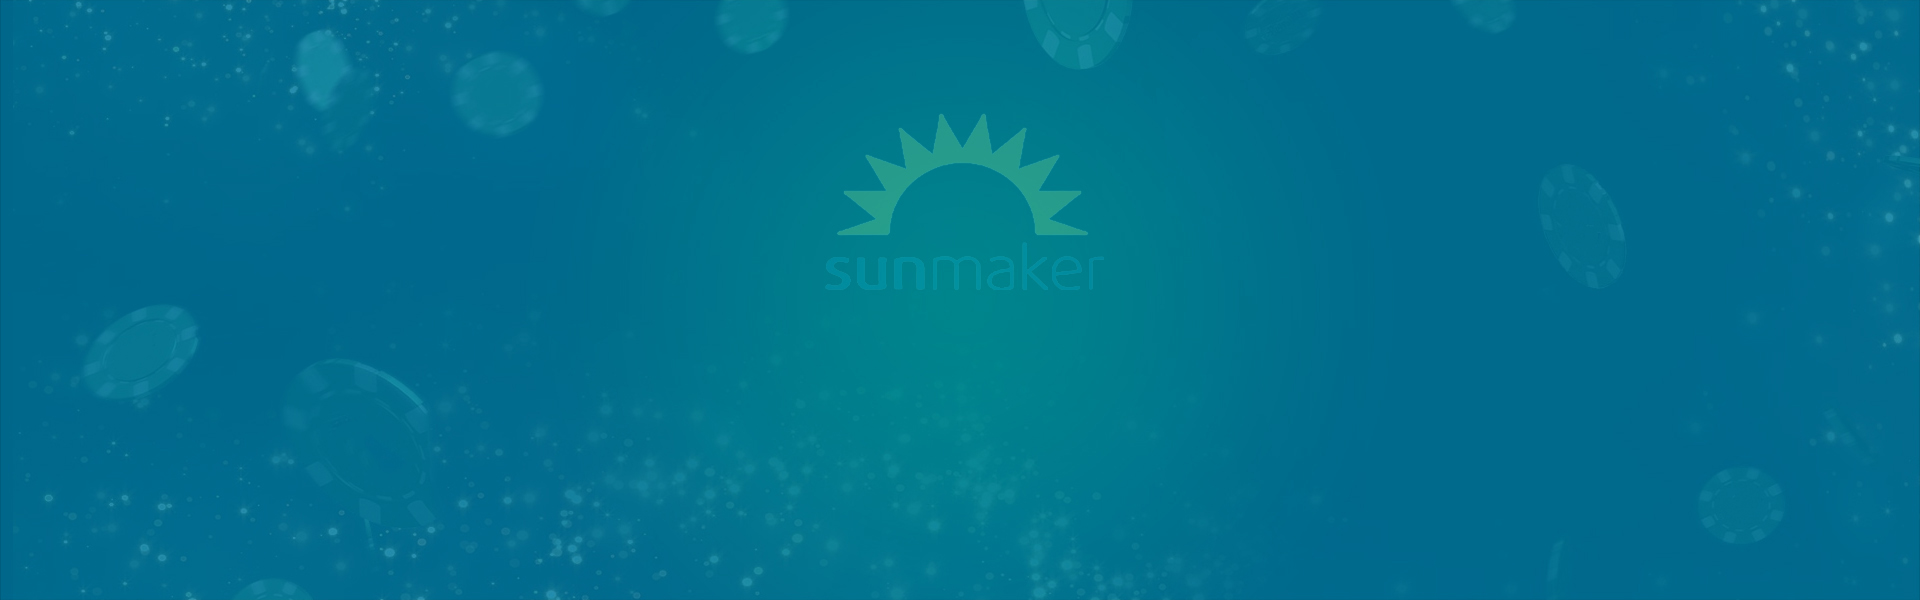 sunmaker featured